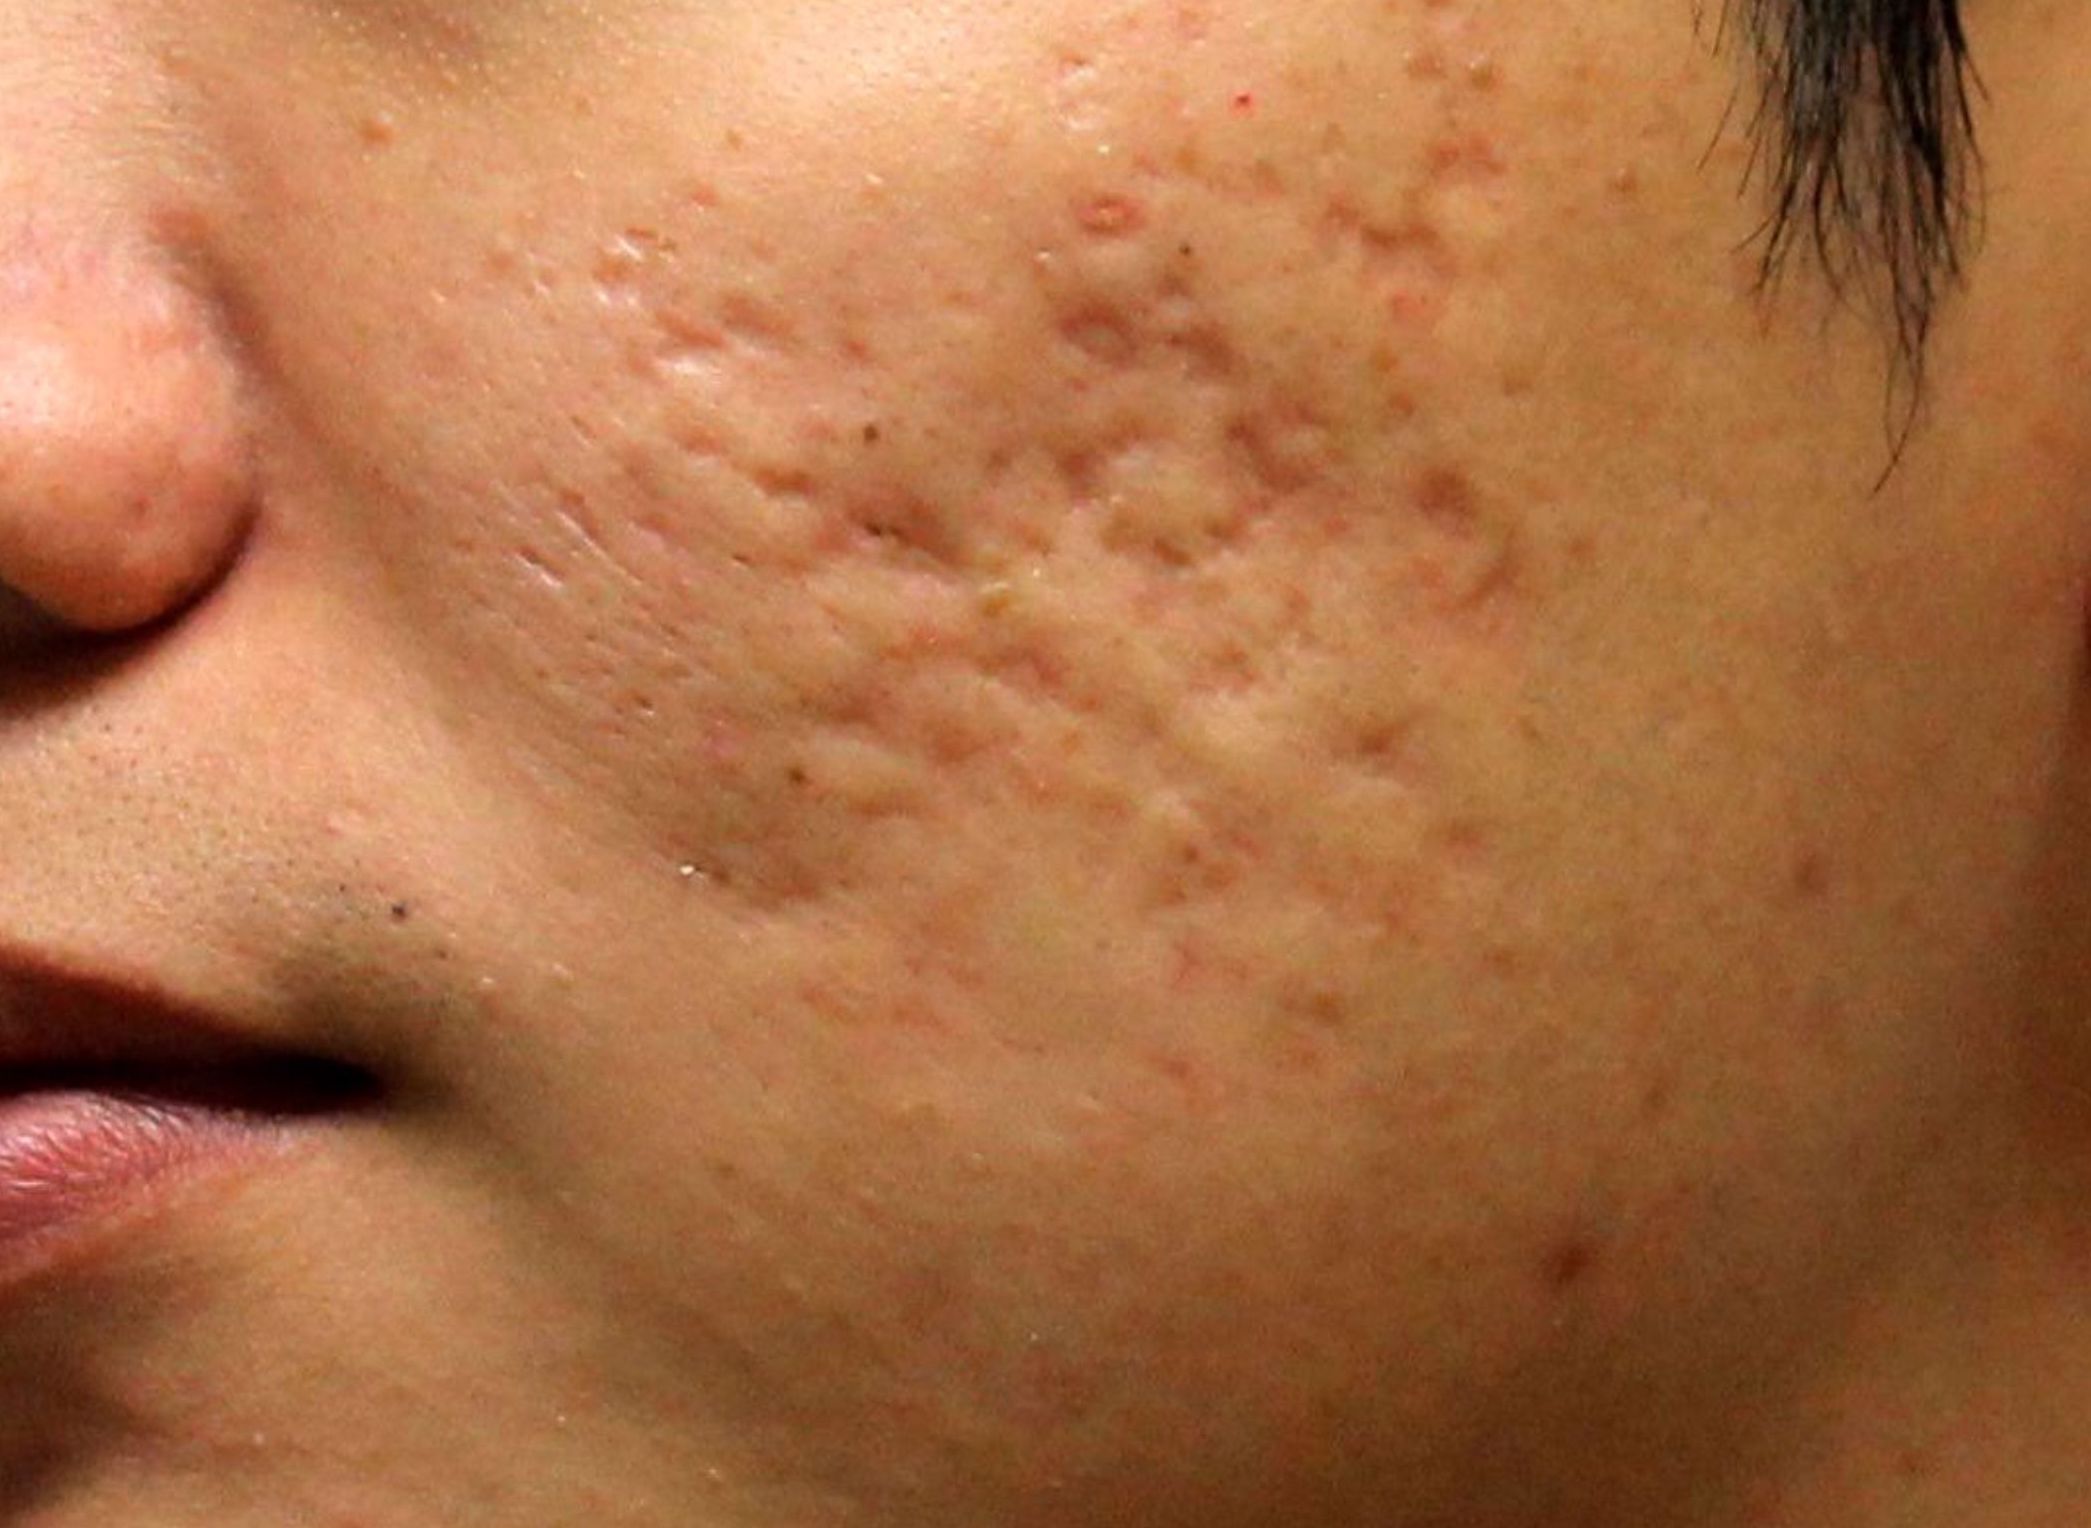 How Deep are Acne Scars?